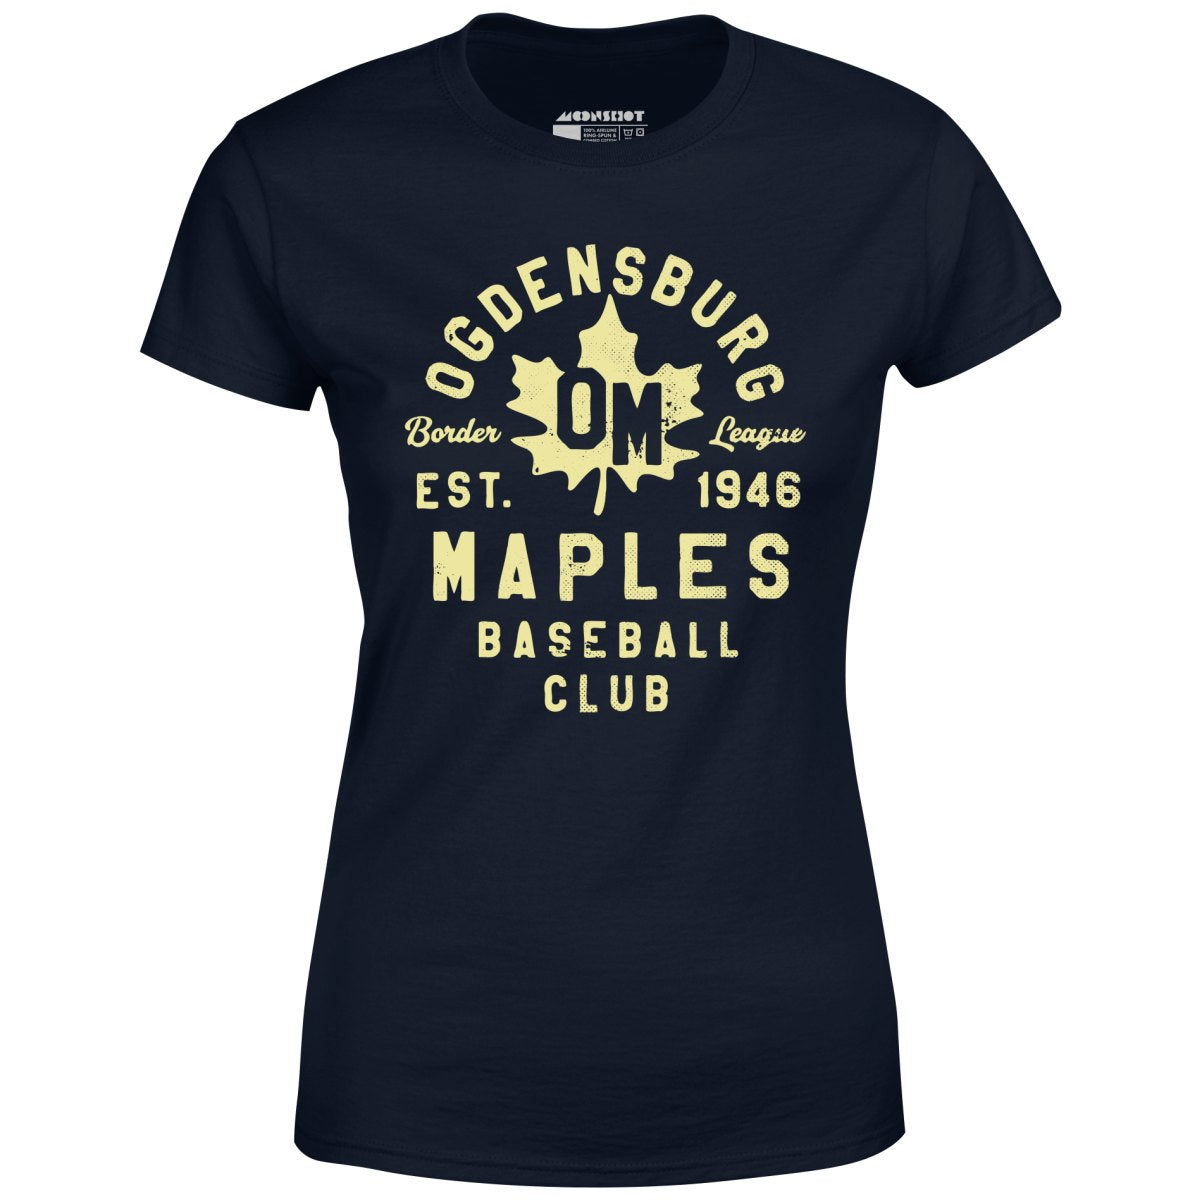 Ogdensburg Maples - New York - Vintage Defunct Baseball Teams - Women's T-Shirt